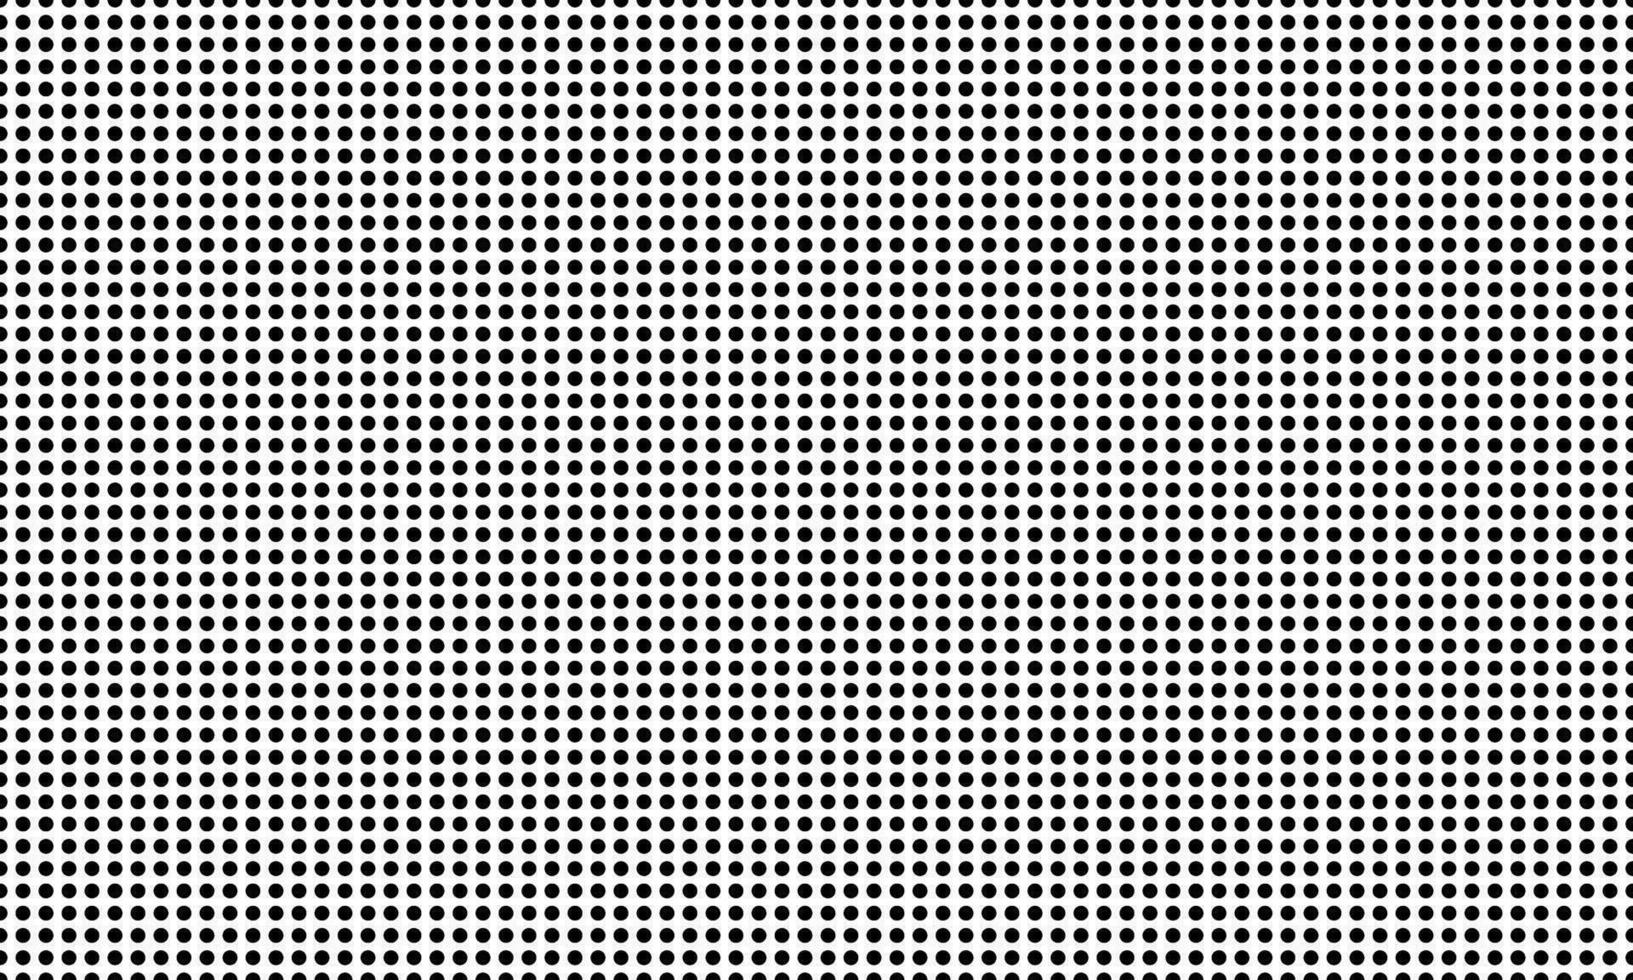 Vector Gradient Halftone Ben Day Dots Transparent Overlay Background ...